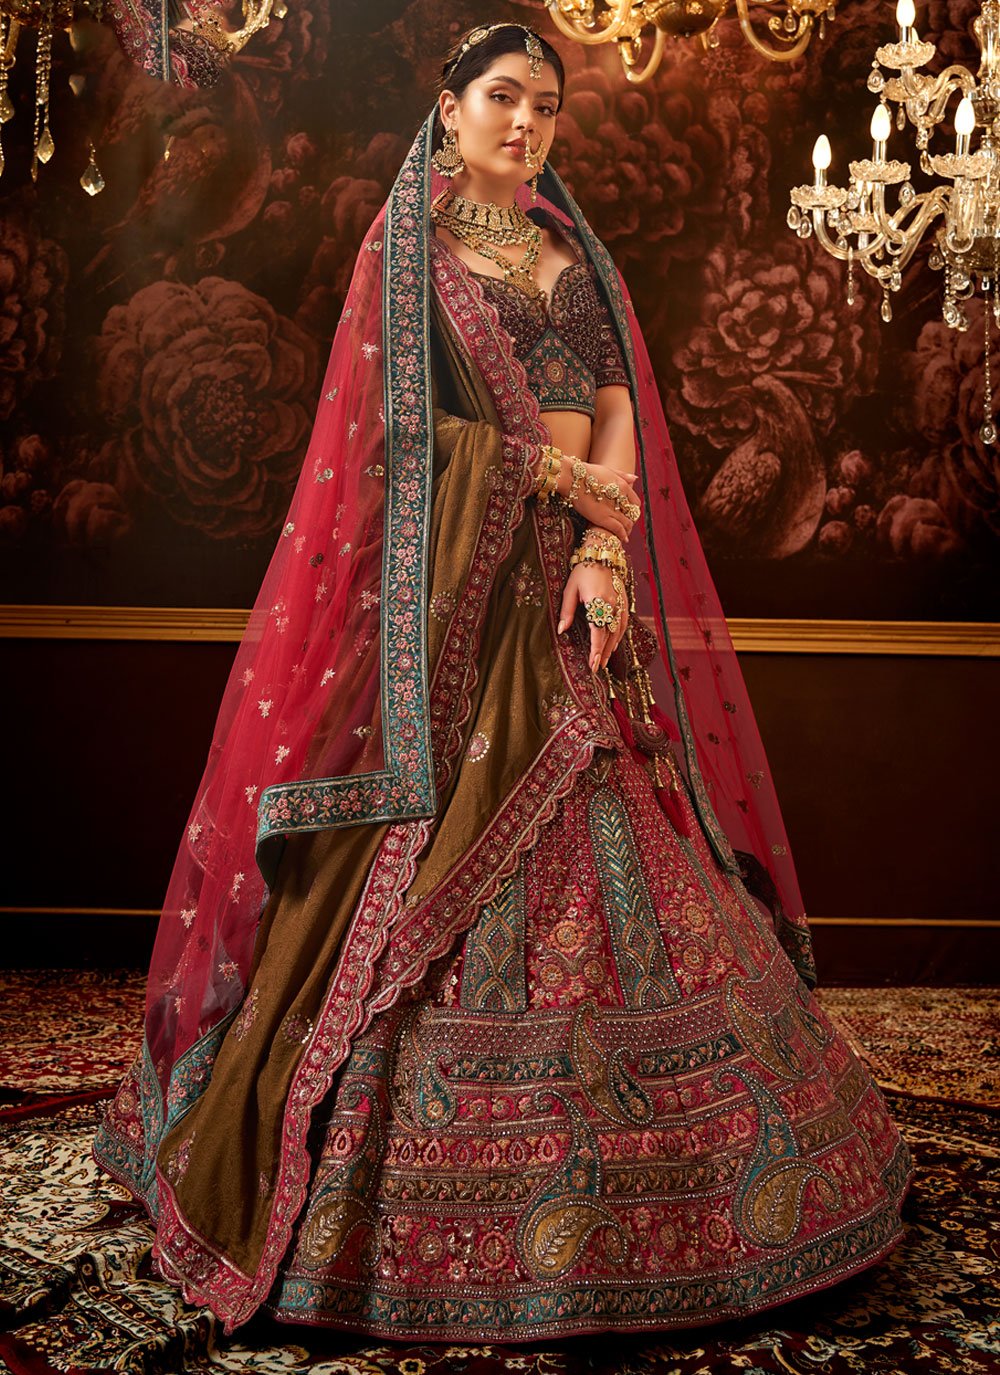 Rani color designer Wedding Lehenga for Bride - Aazuri